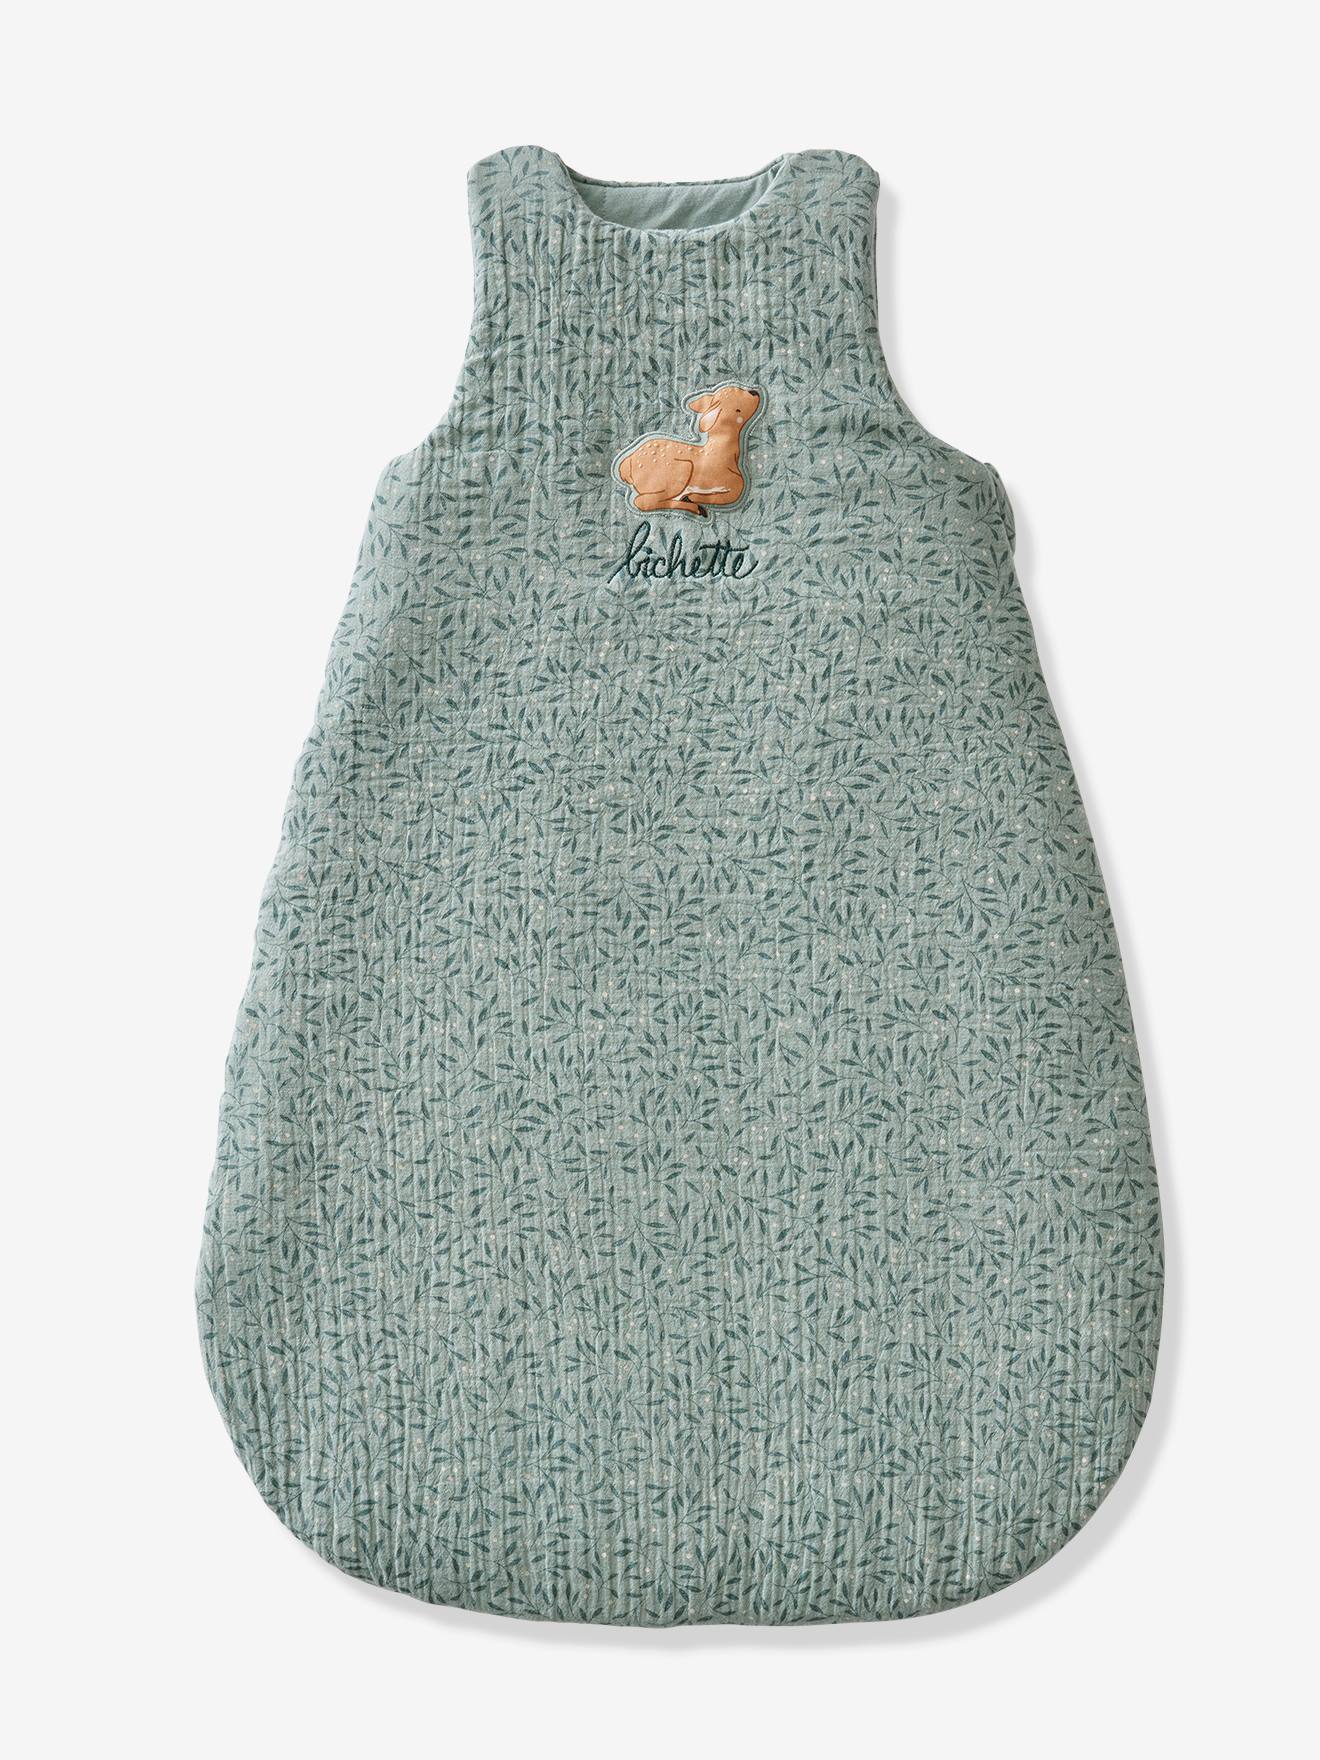 Sleeveless Baby Sleeping Bag in Cotton Gauze, Broceliande printed green